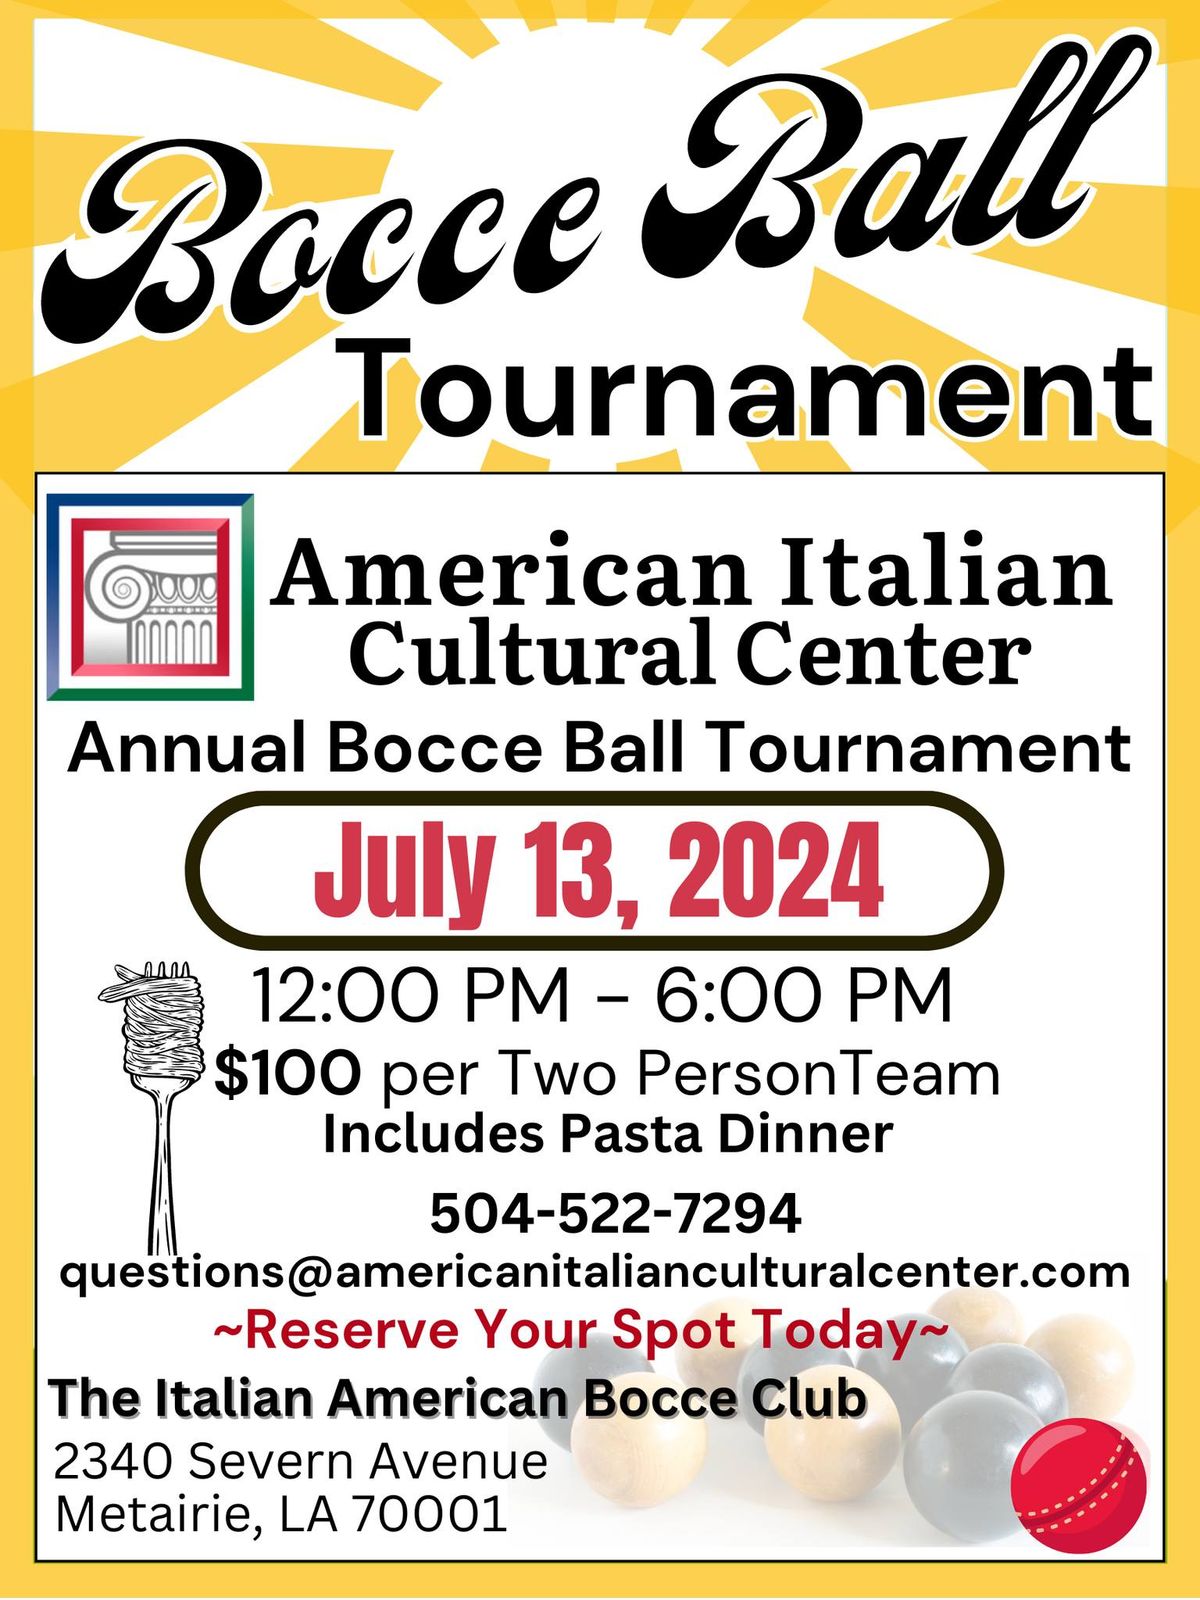 Annual Bocce Ball Tournament 